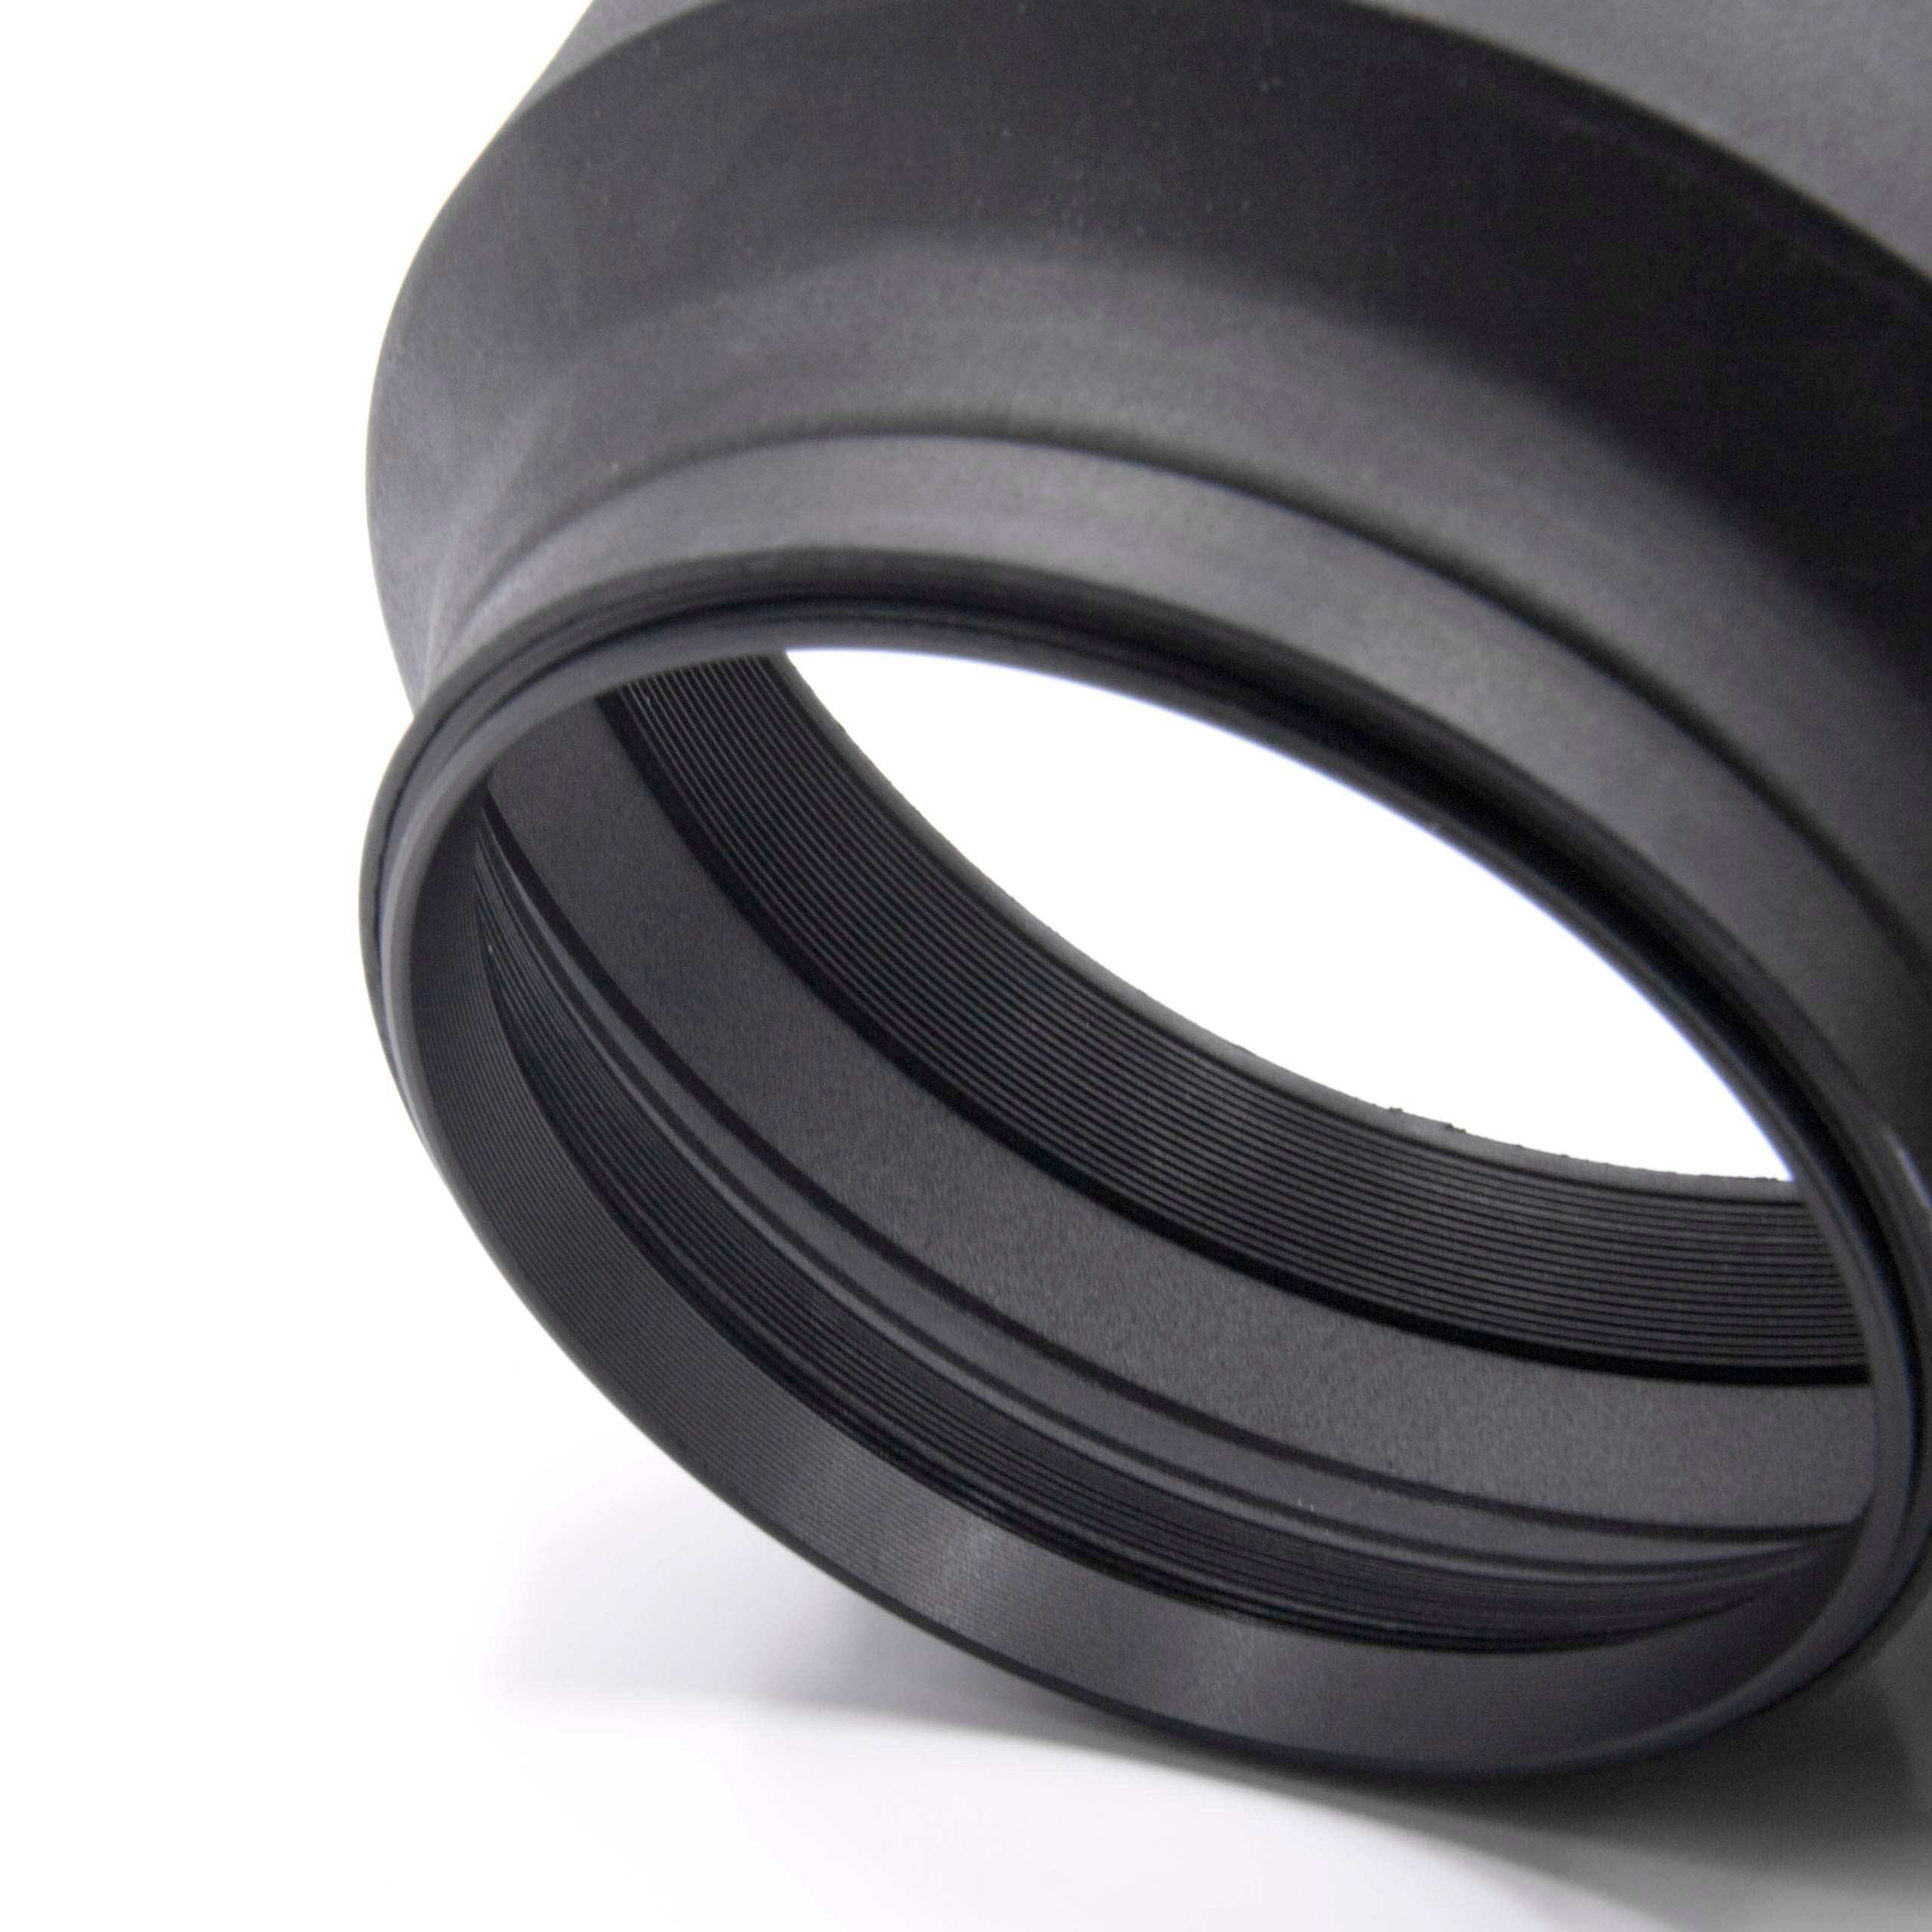 Lens Hood suitable for 77mm Lens - Lens Shade Black, Round